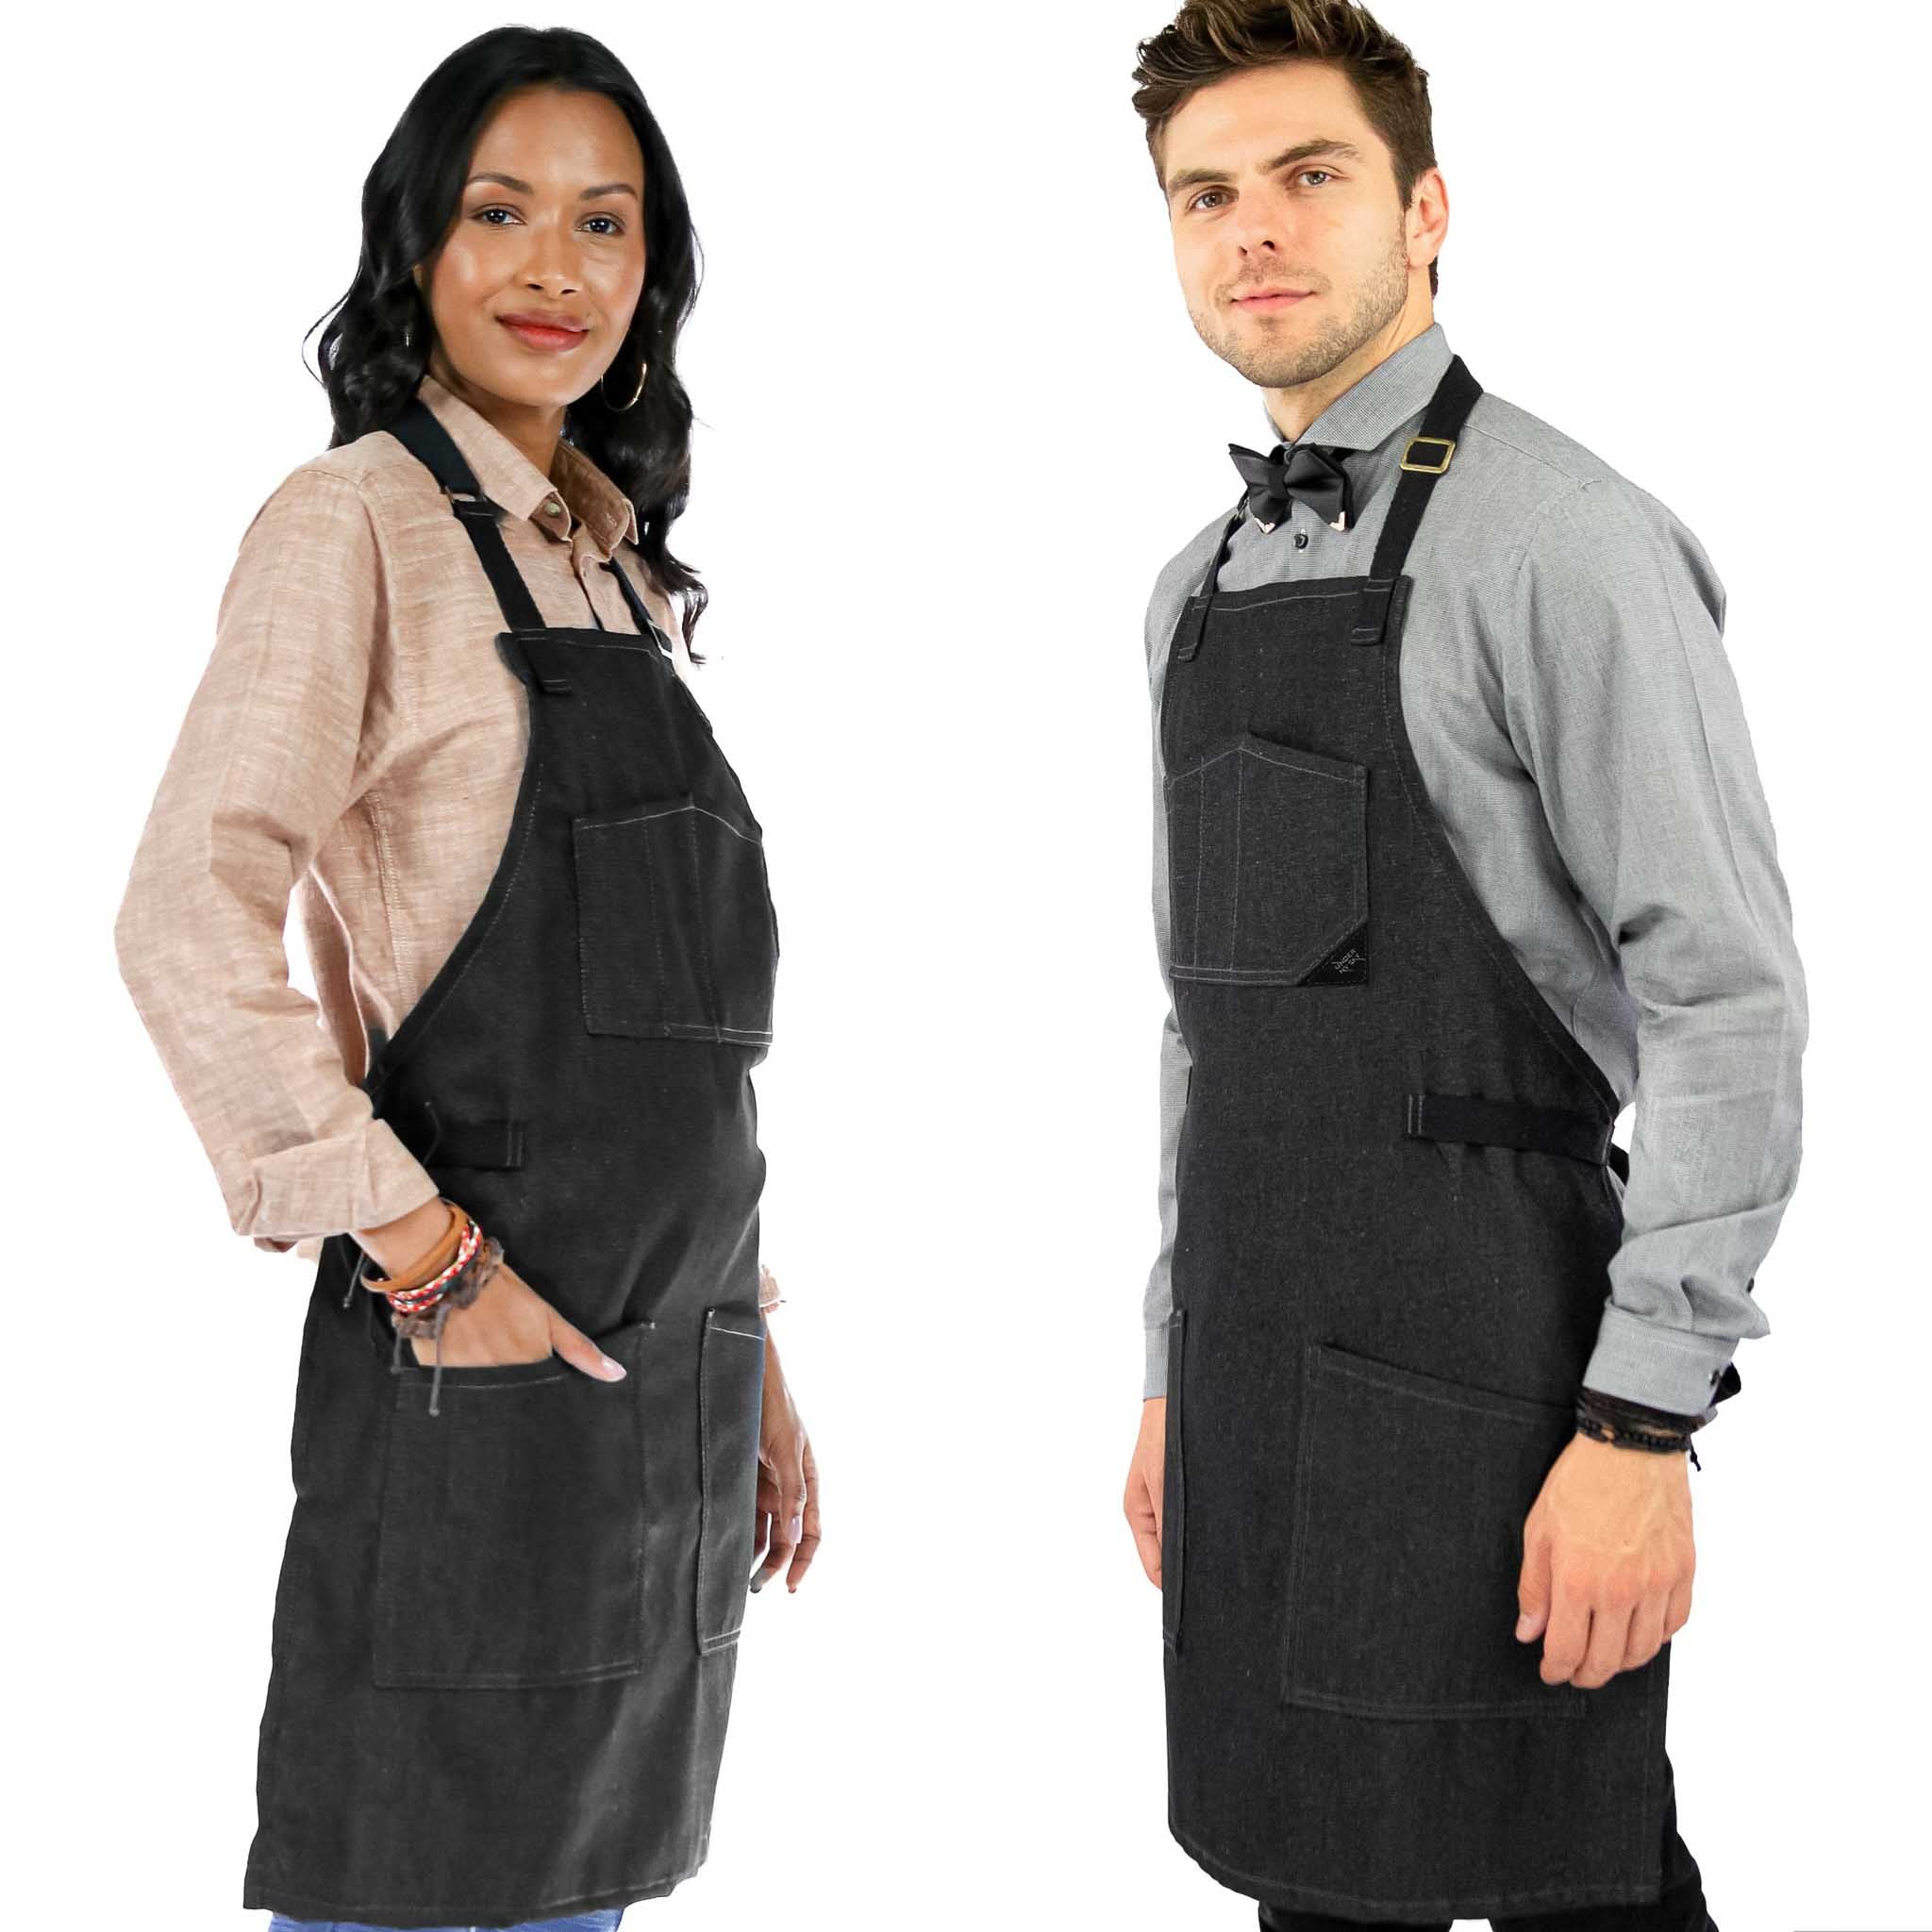 Chef Apron – Denim or Twill - Cotton Straps - Smart Pockets - Pro Chef,  Cook, Barista, Bartender